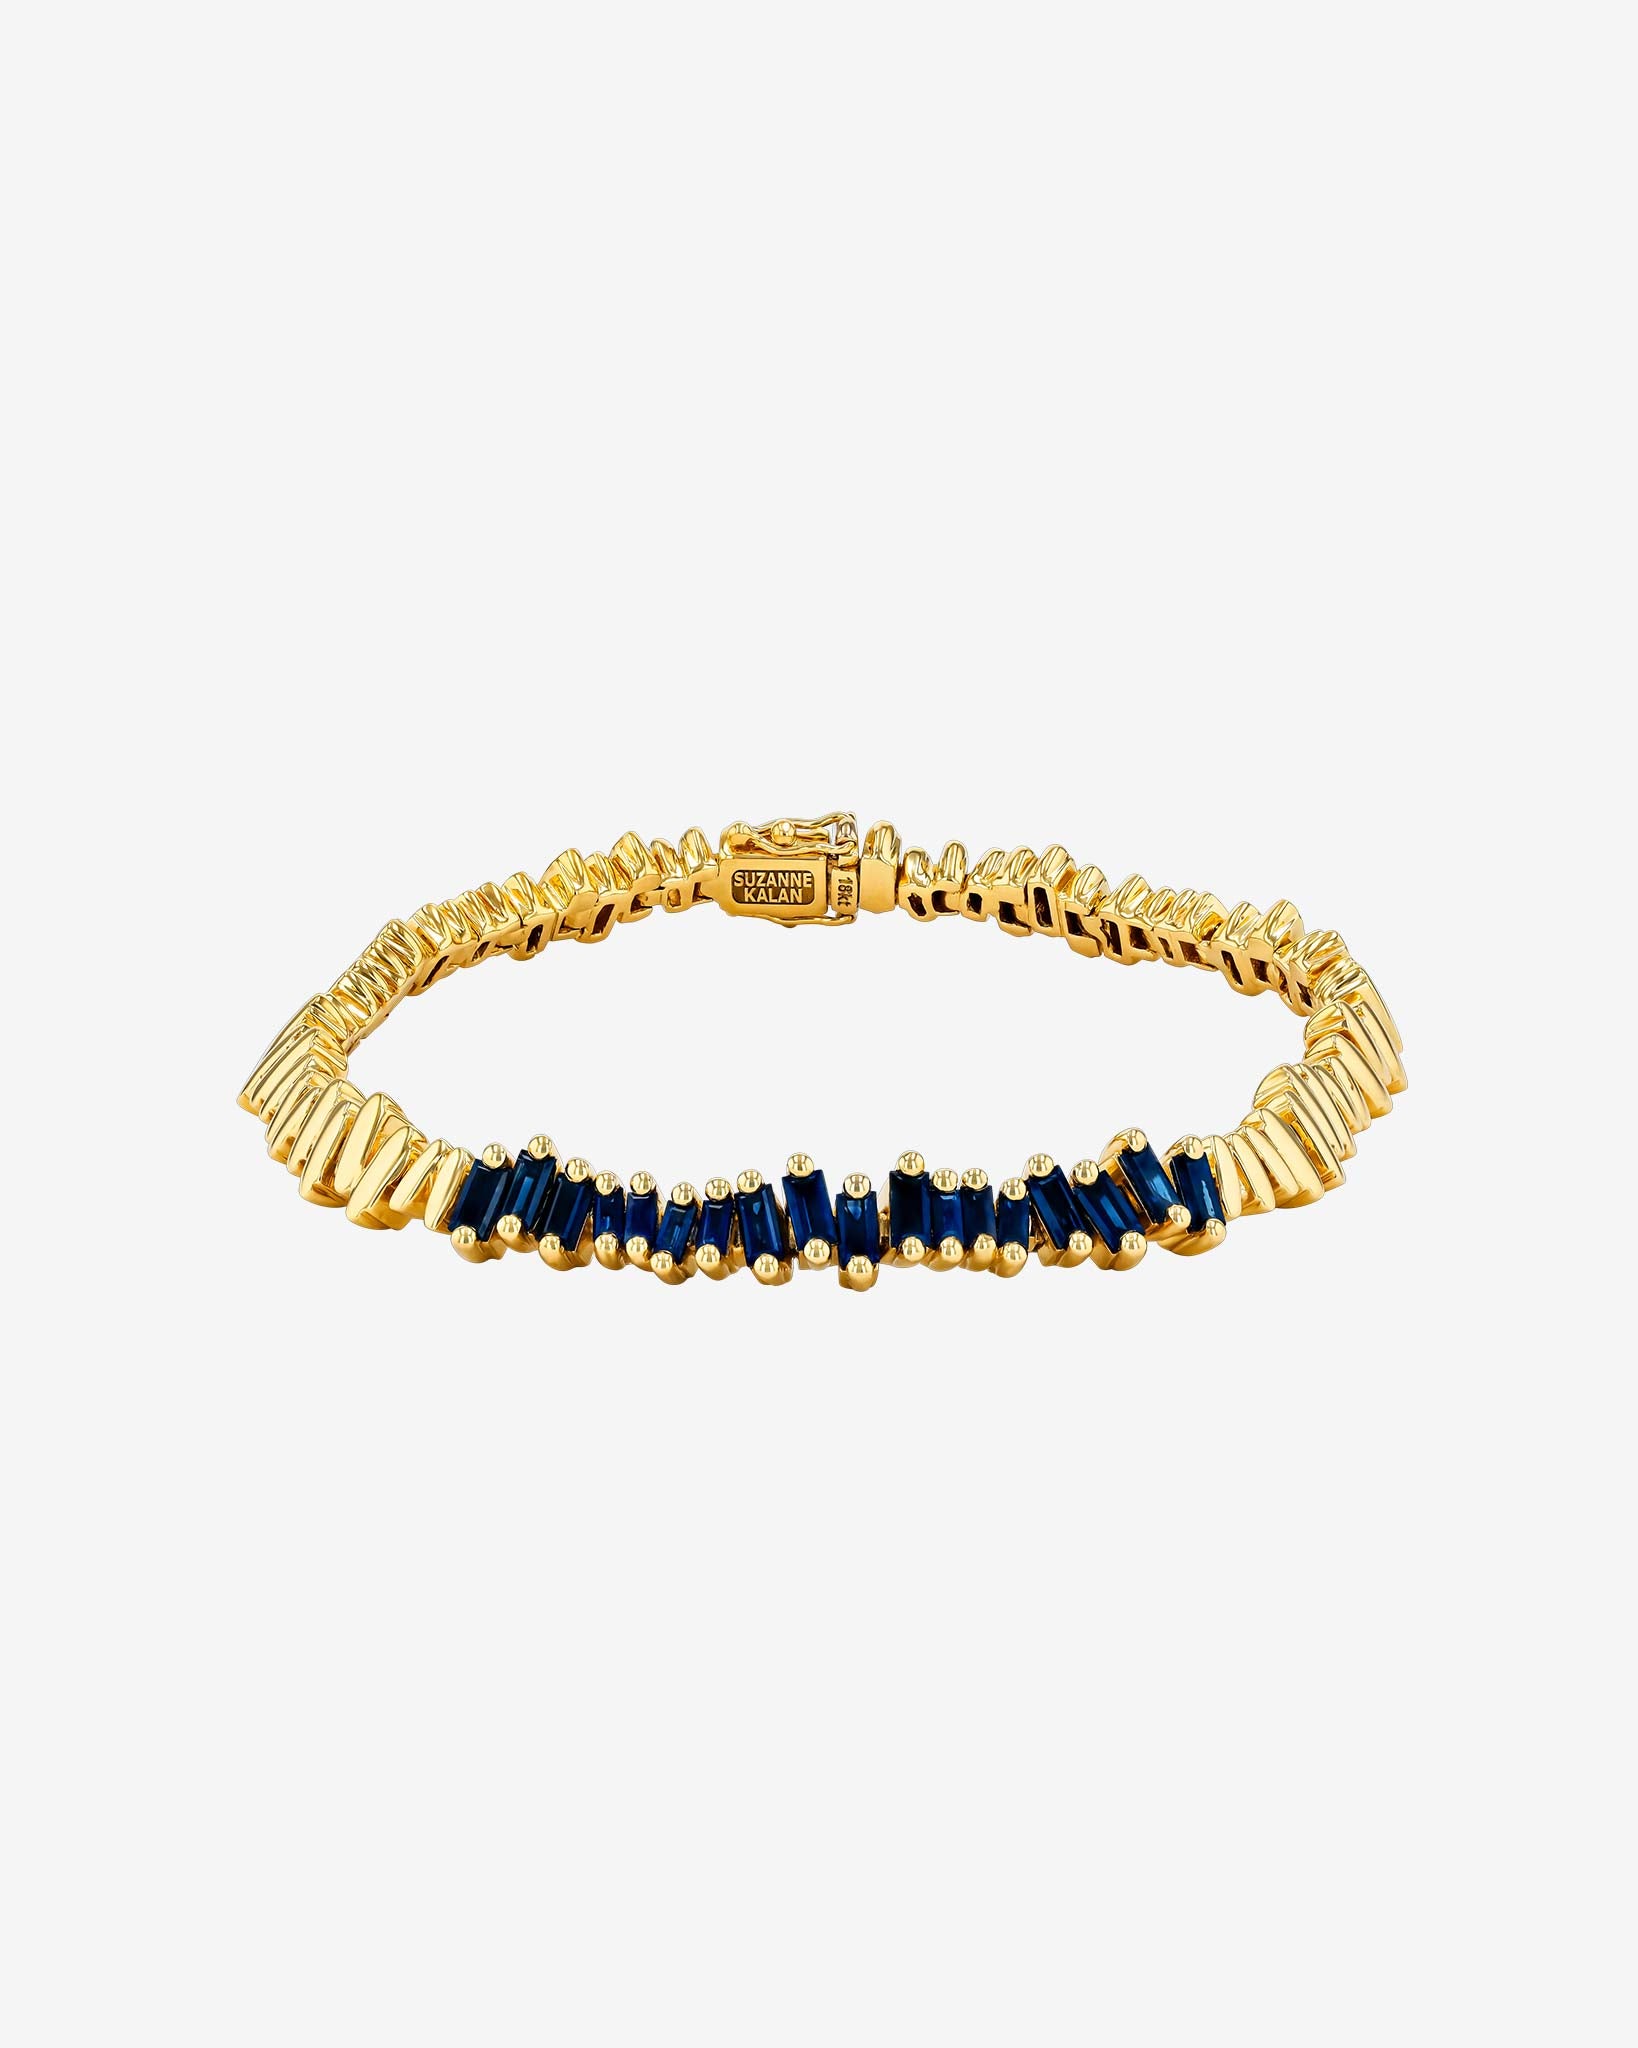 Suzanne Kalan Golden Dark Blue Sapphire ID Bracelet in 18k yellow gold